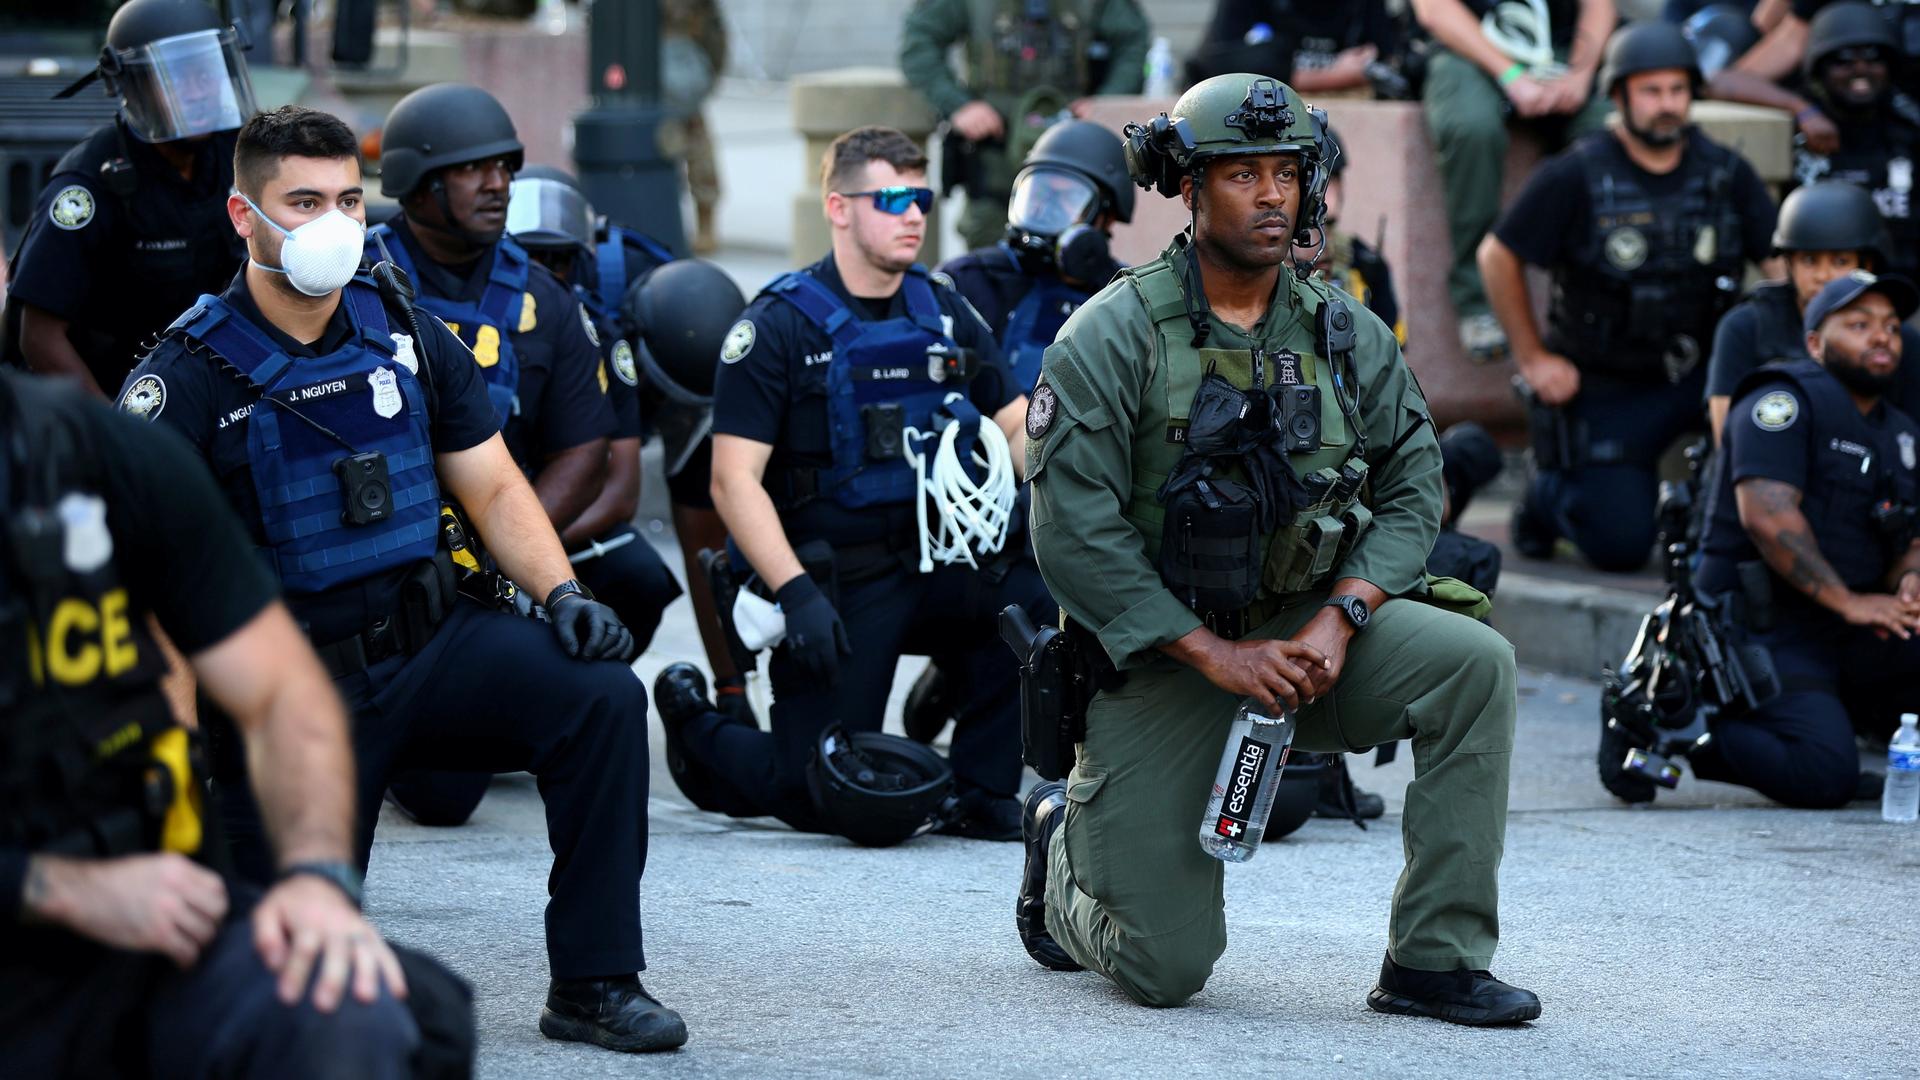 Men in police uniform kneel on an urban street. 